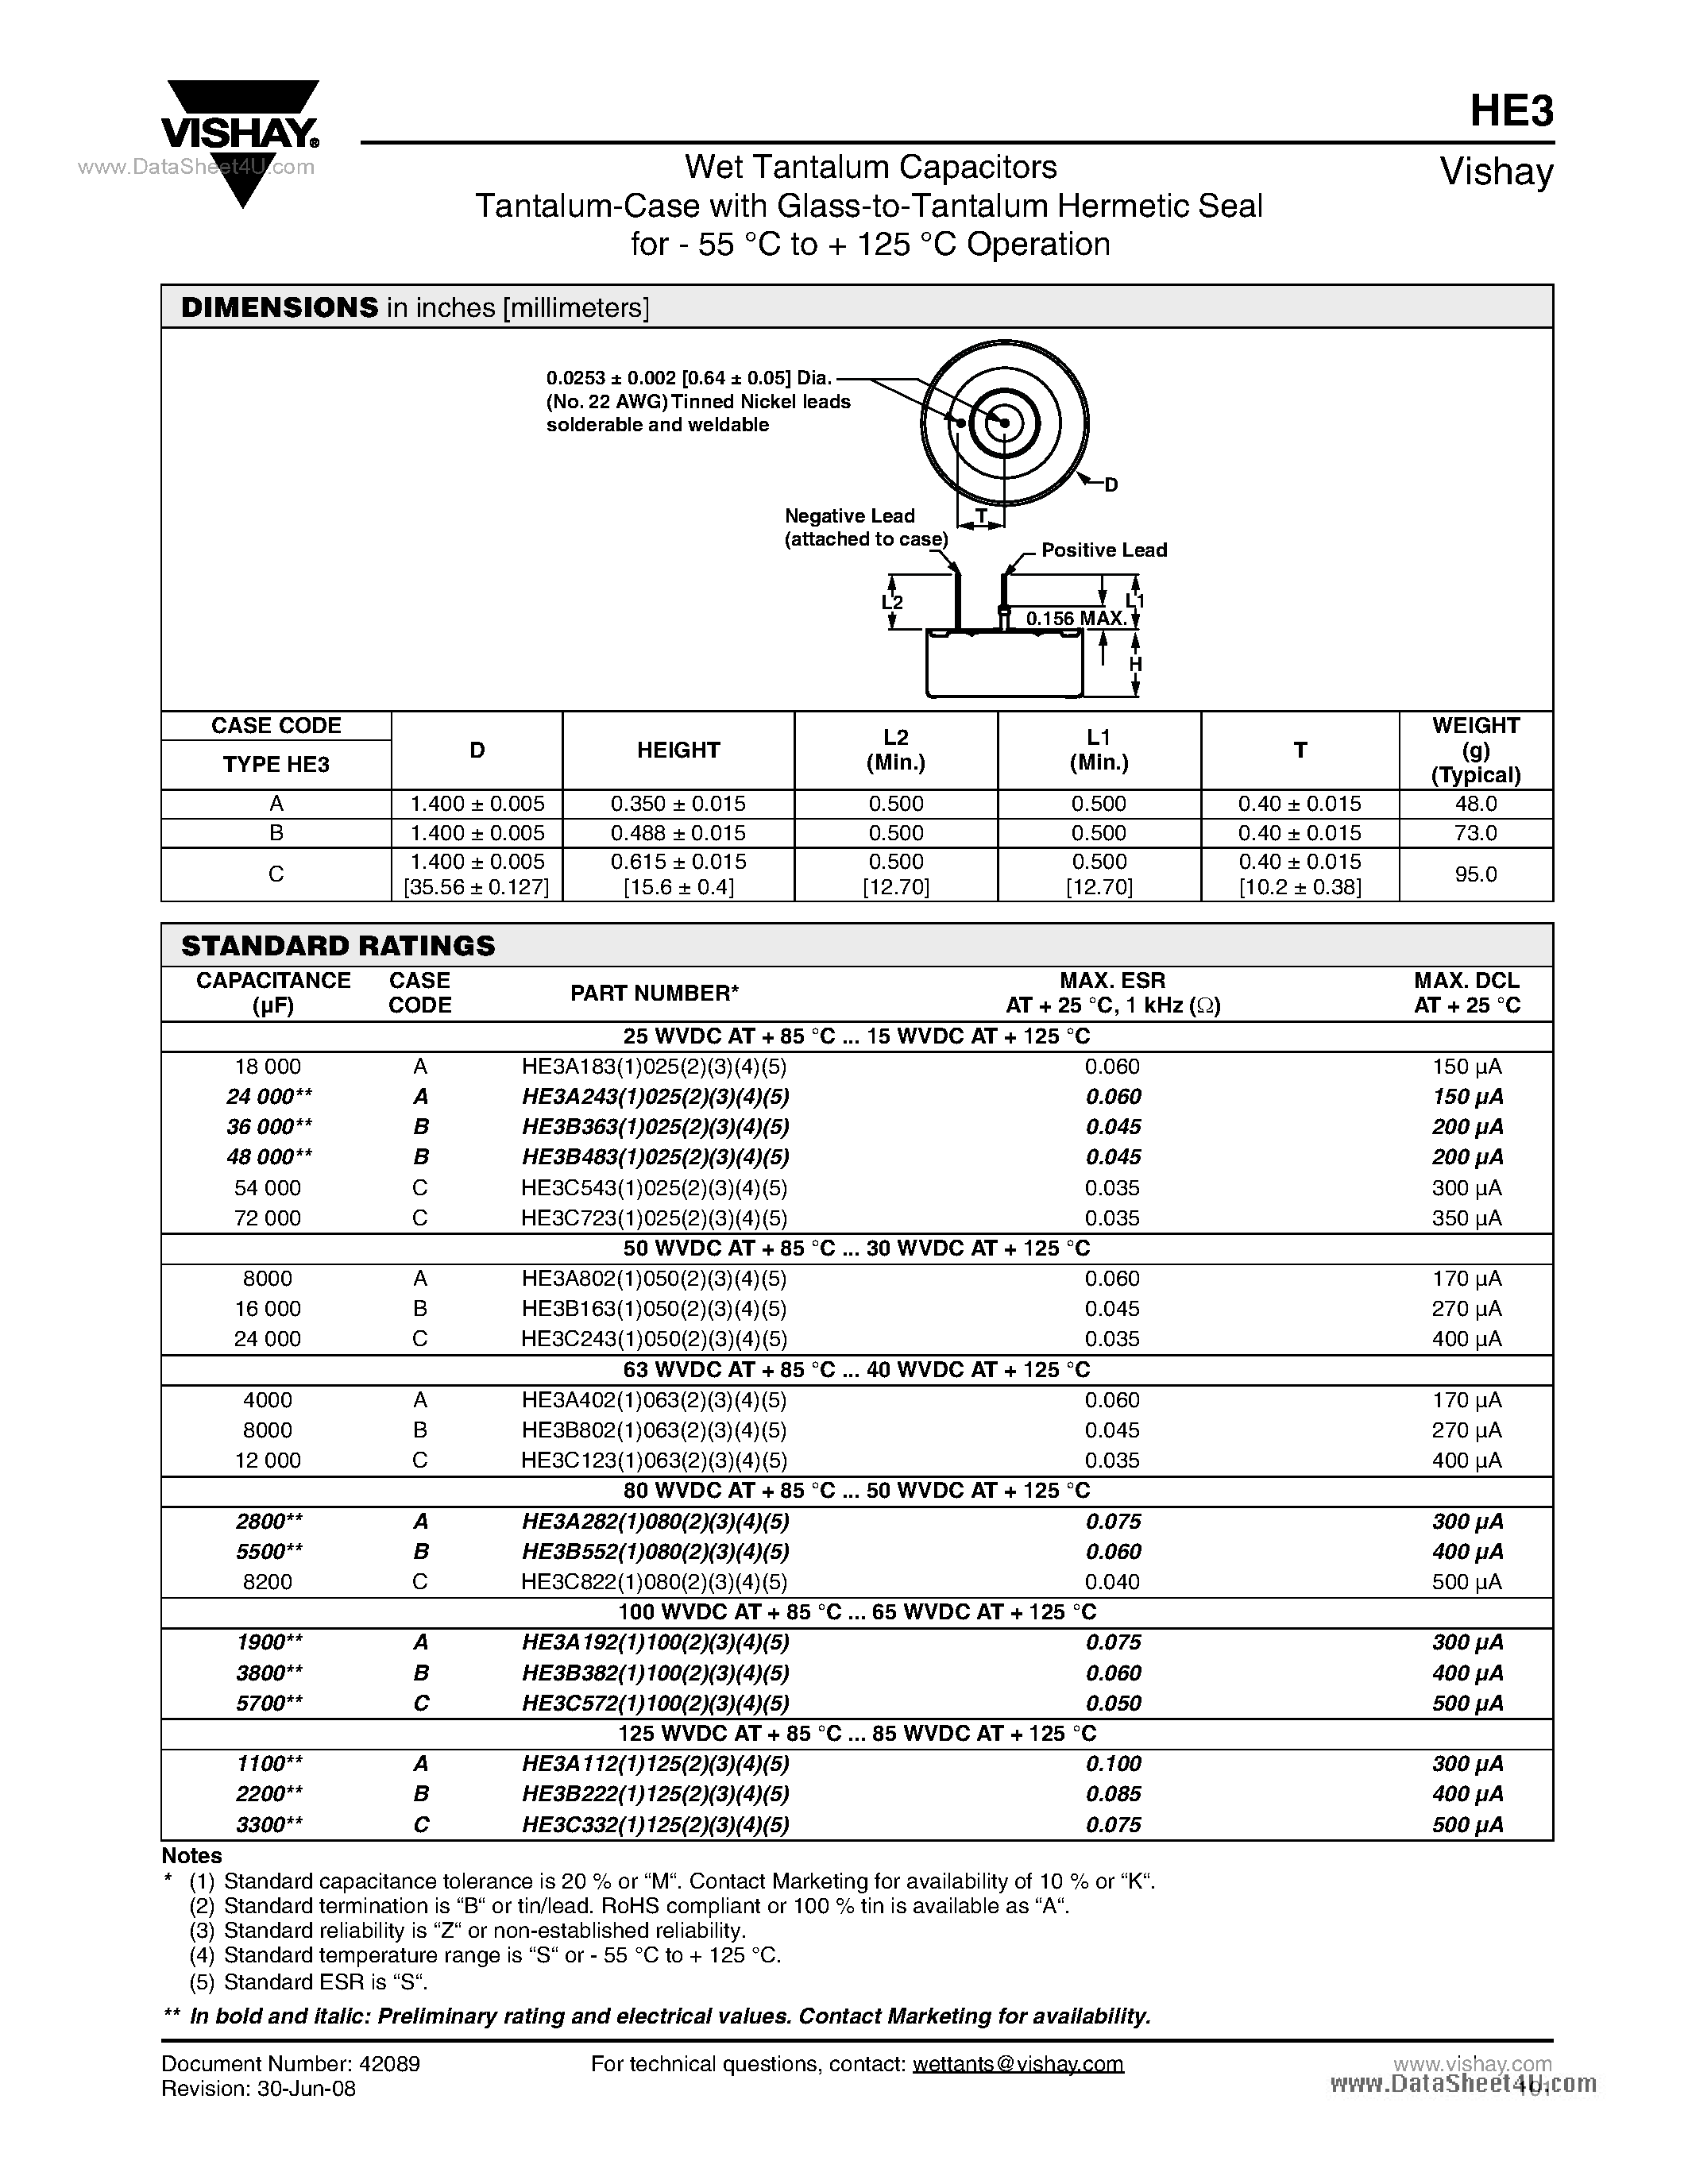 Datasheet HE3 - Wet Tantalum Capacitors Tantalum-Case page 2